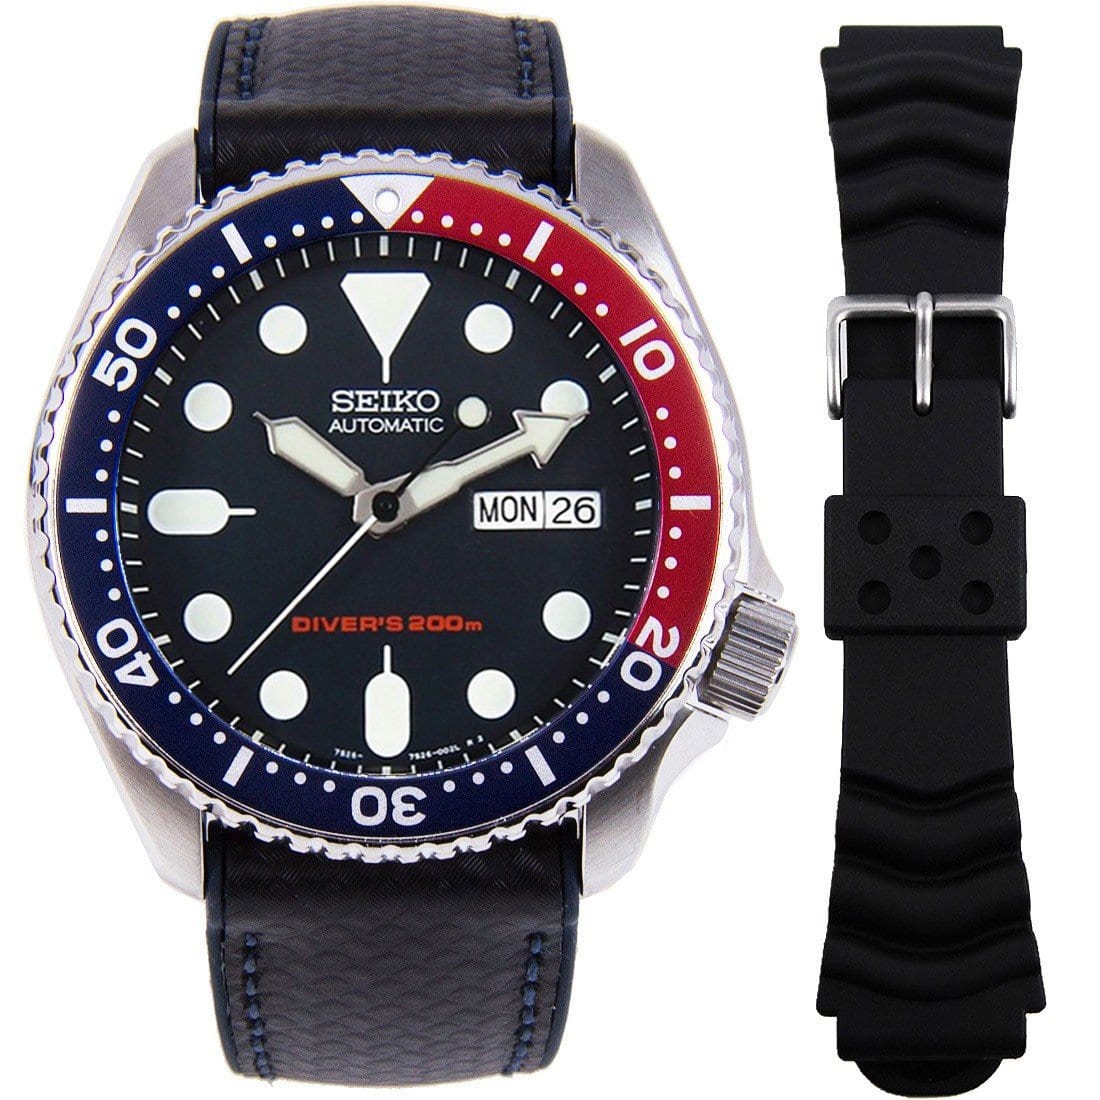 SKX009K1 SKX009K Seiko Automatic Analog Male Divers Watch with Extra Strap